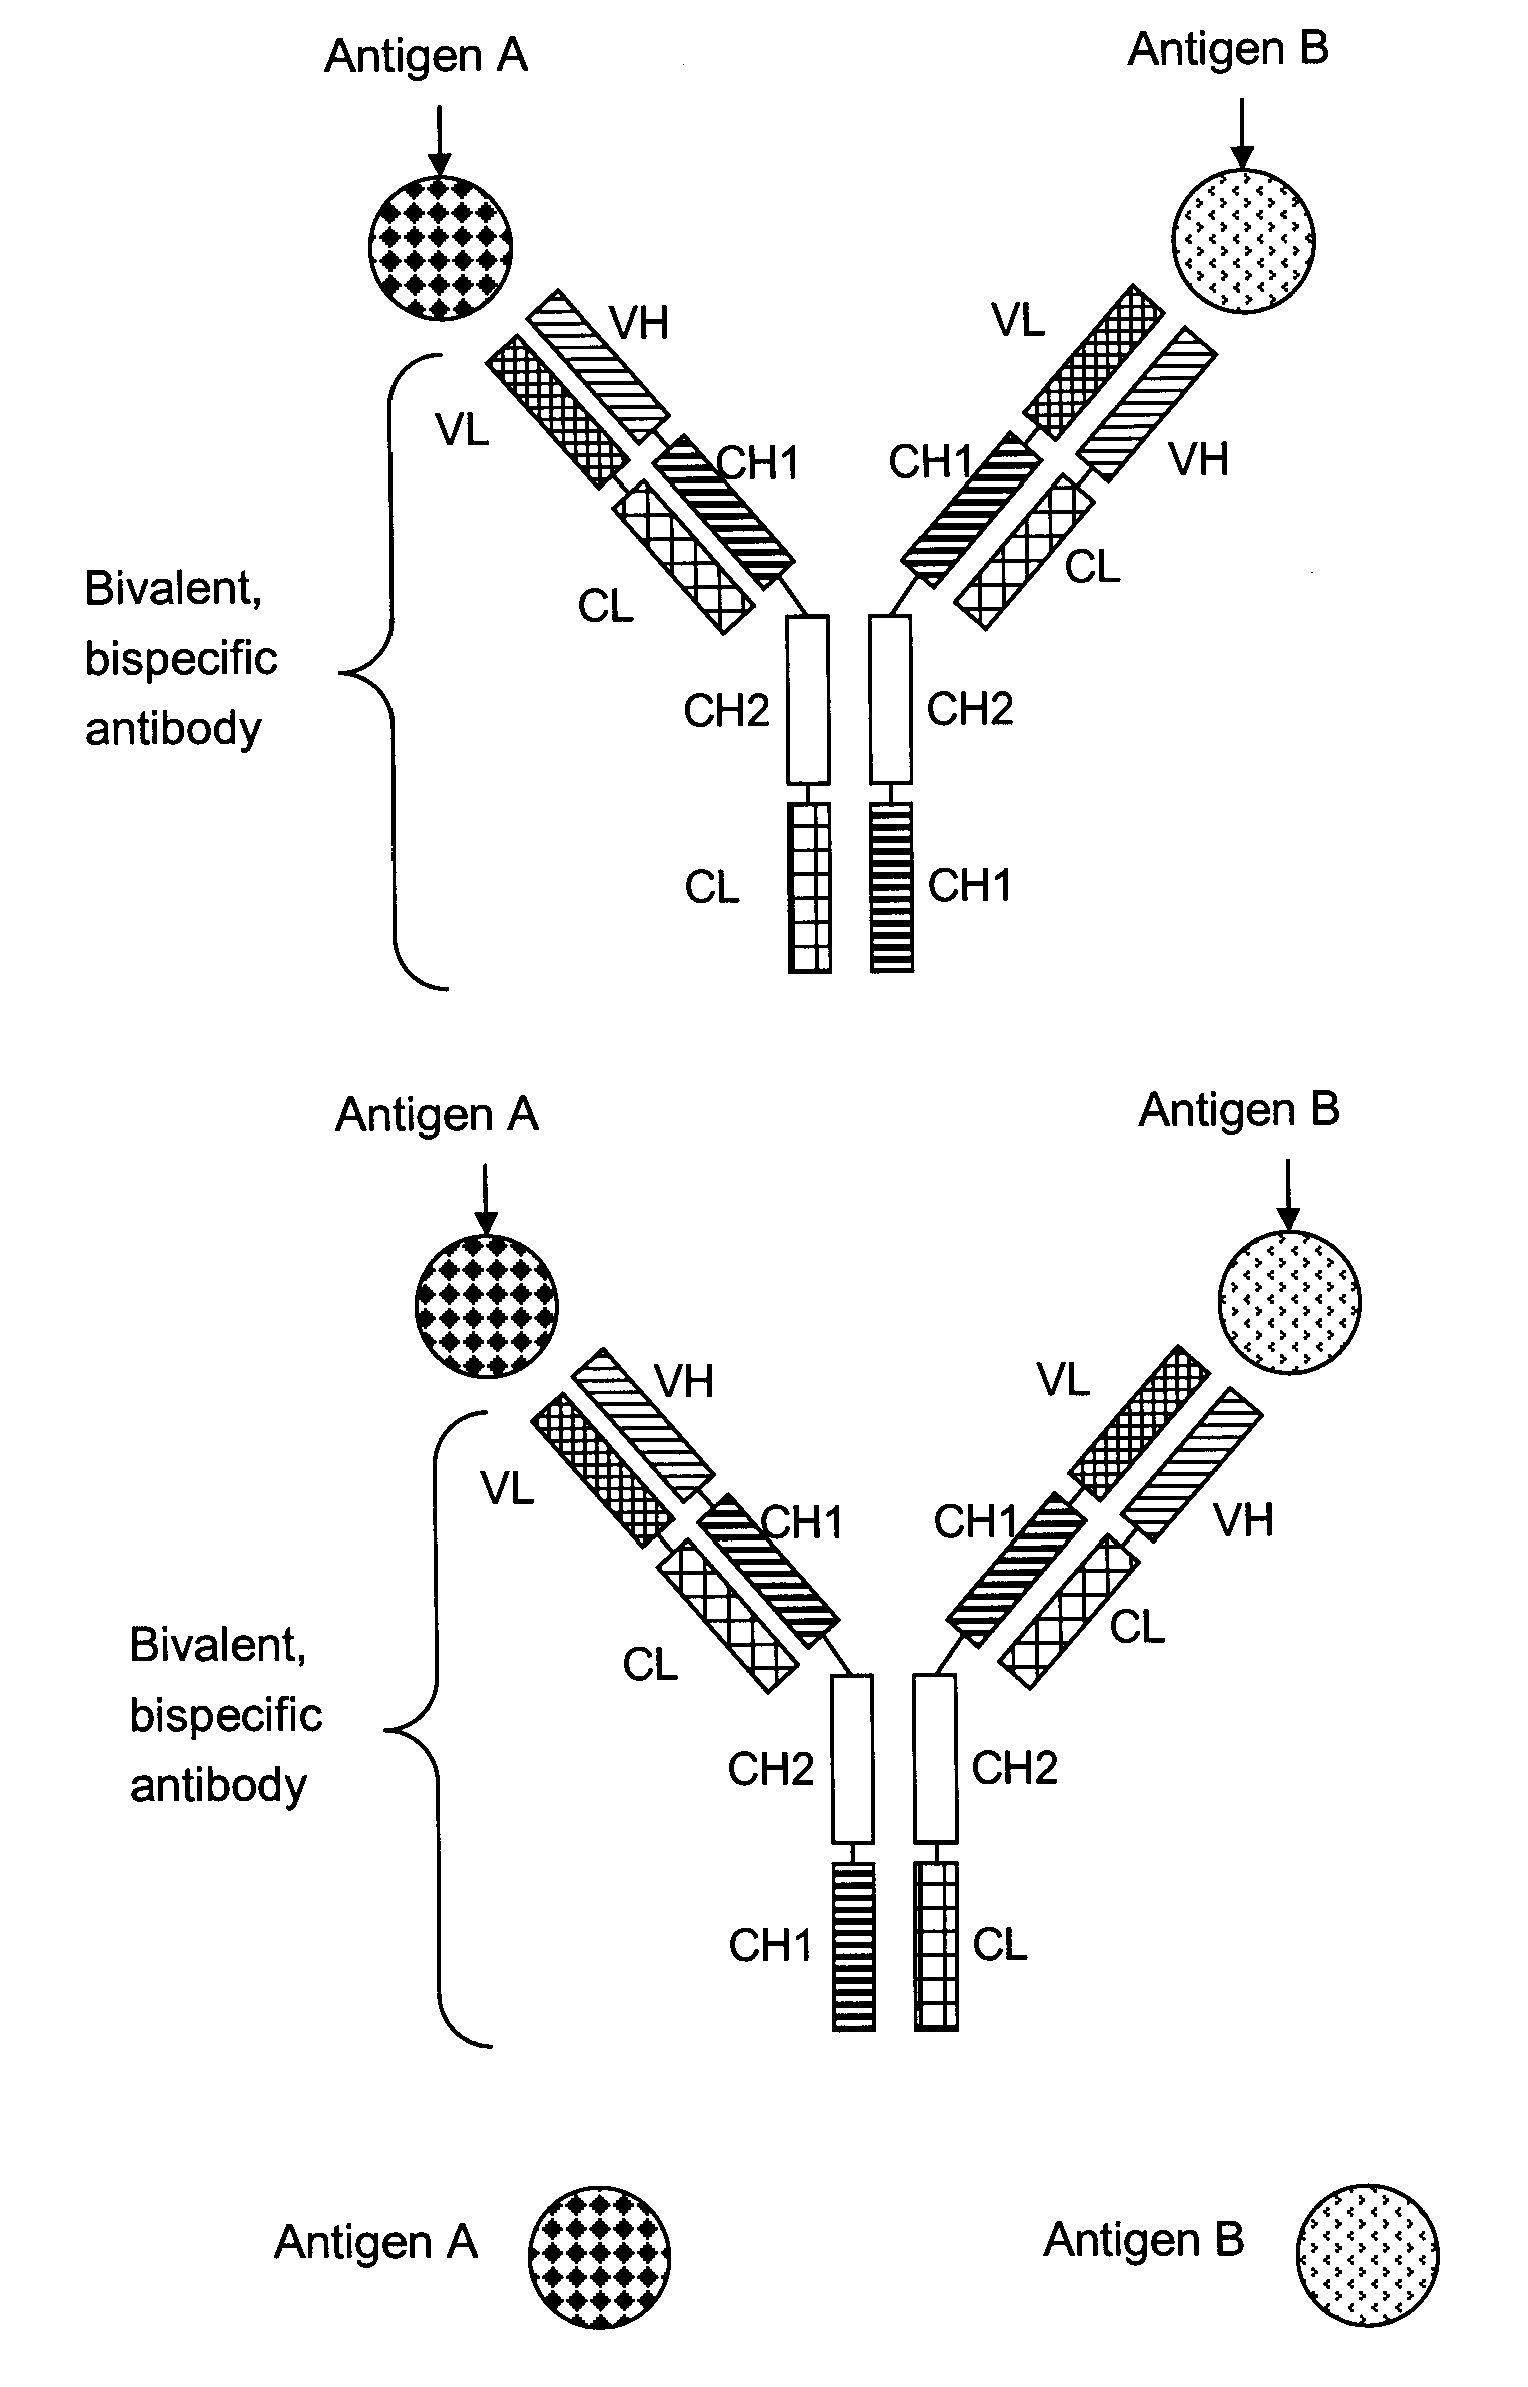 Bivalent, bispecific antibodies